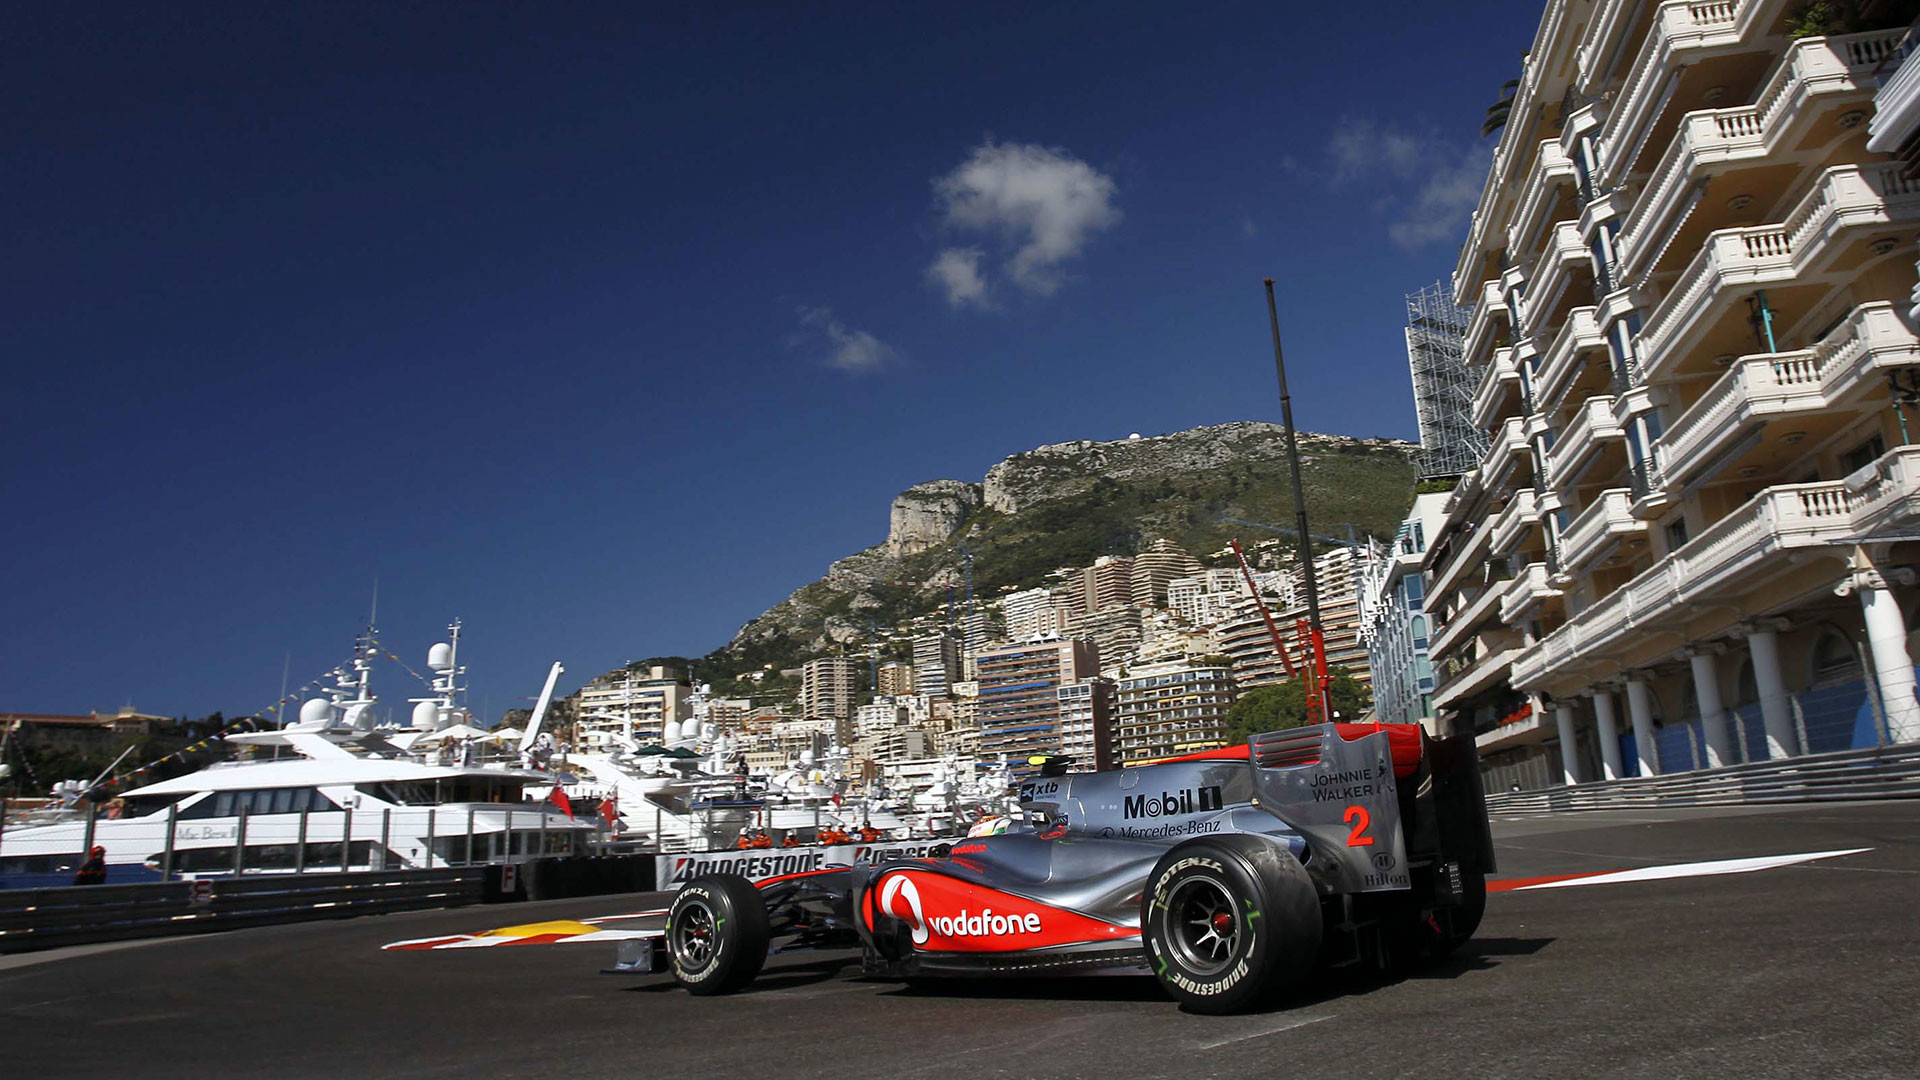 1920x1080 F1-Fansite.com HD Wallpaper 2010 Monaco F1 GP_05.jpg ...